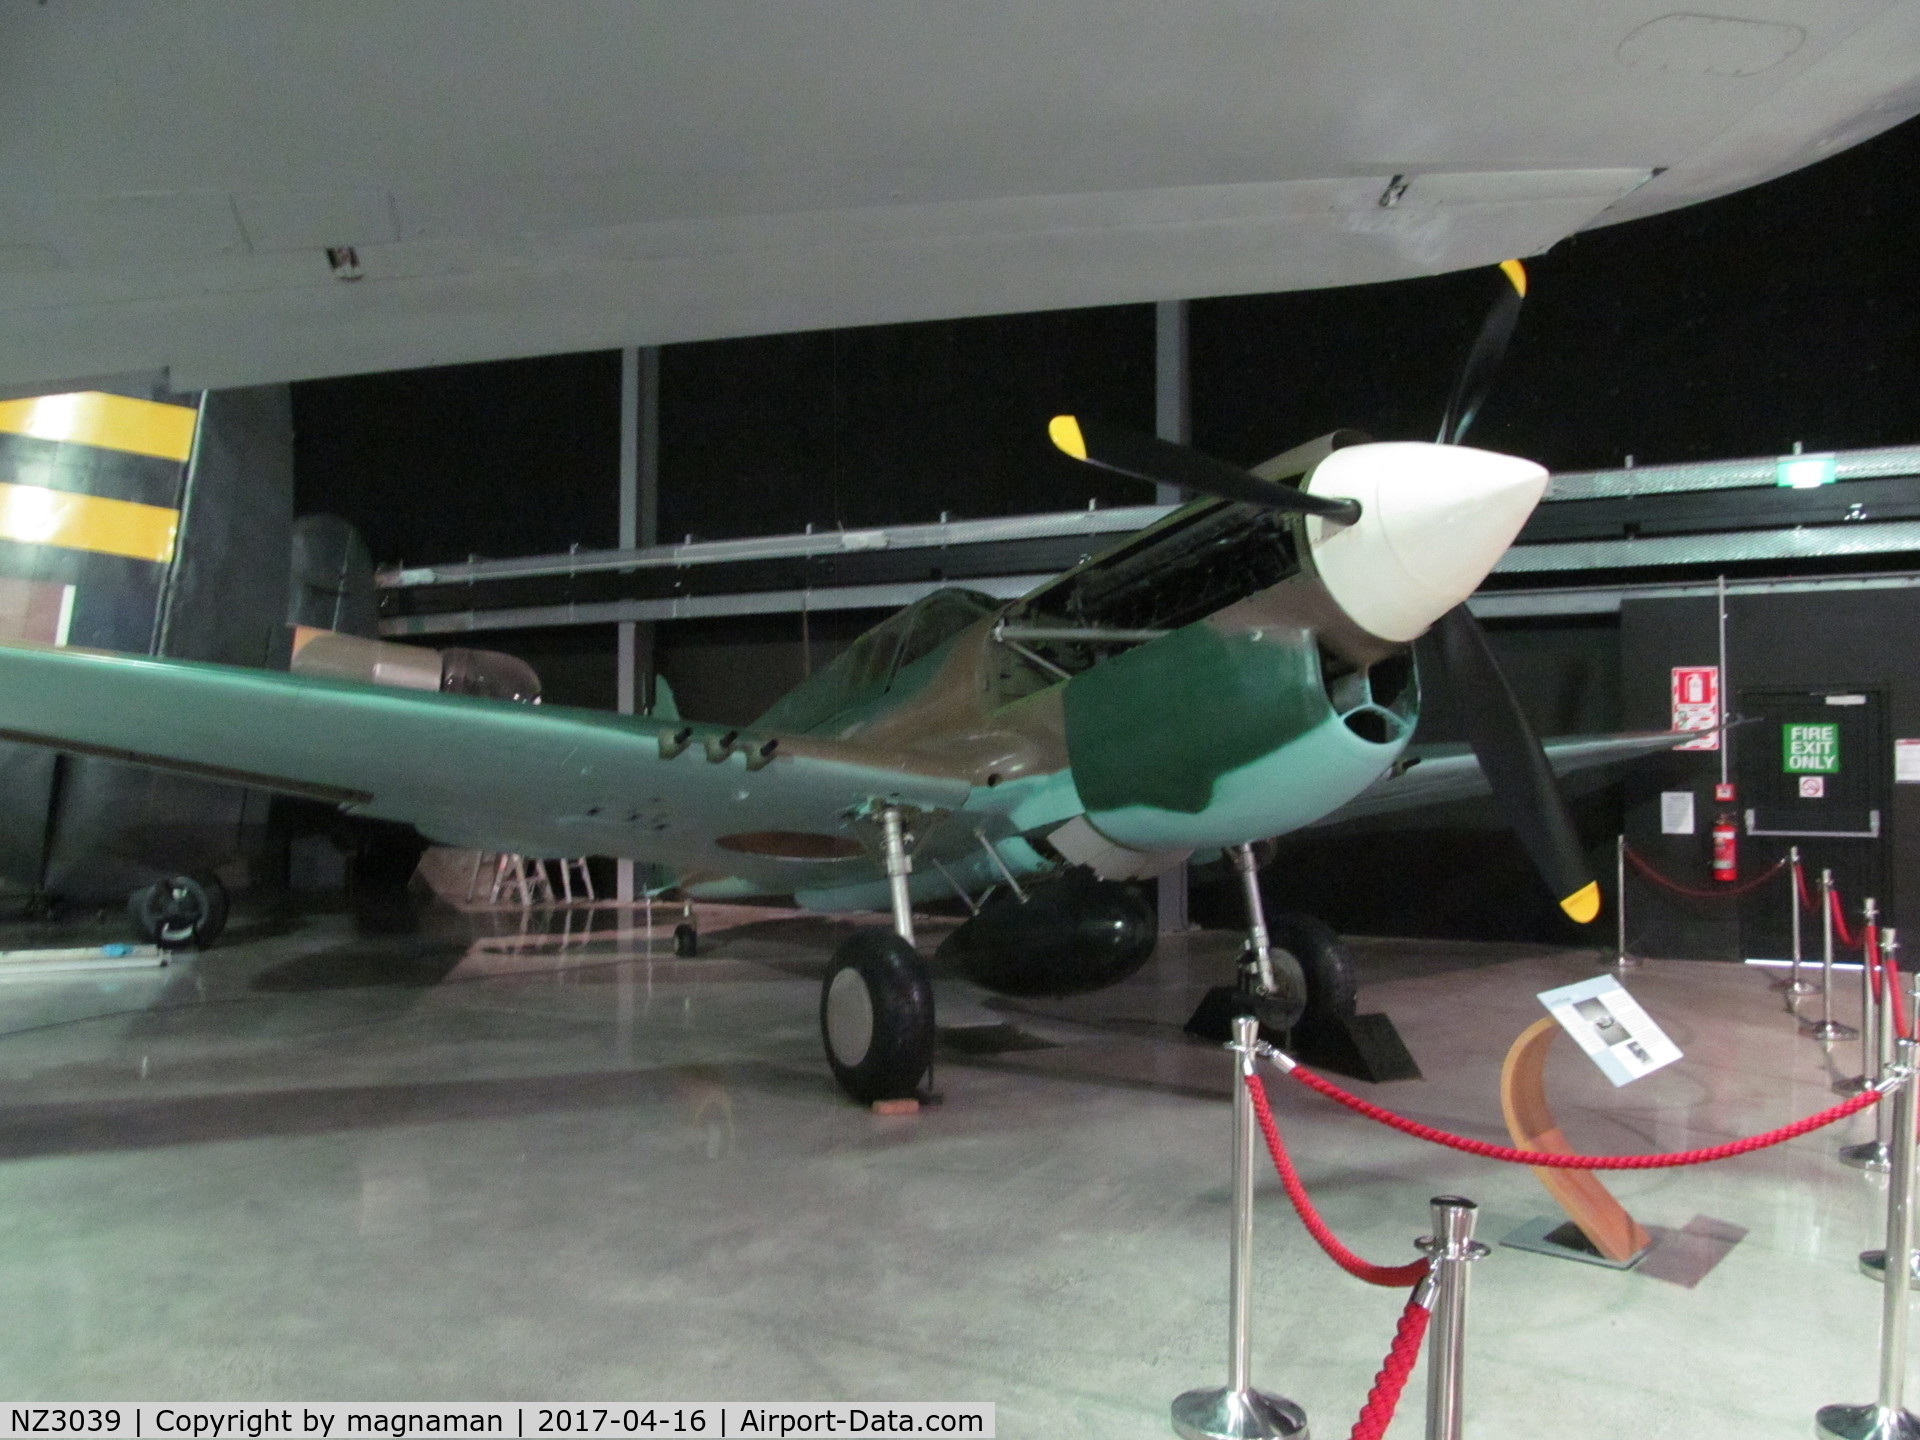 NZ3039, Curtiss P-40E Kittyhawk C/N Not found NZ3039, c/n 20218
on display at MOTAT